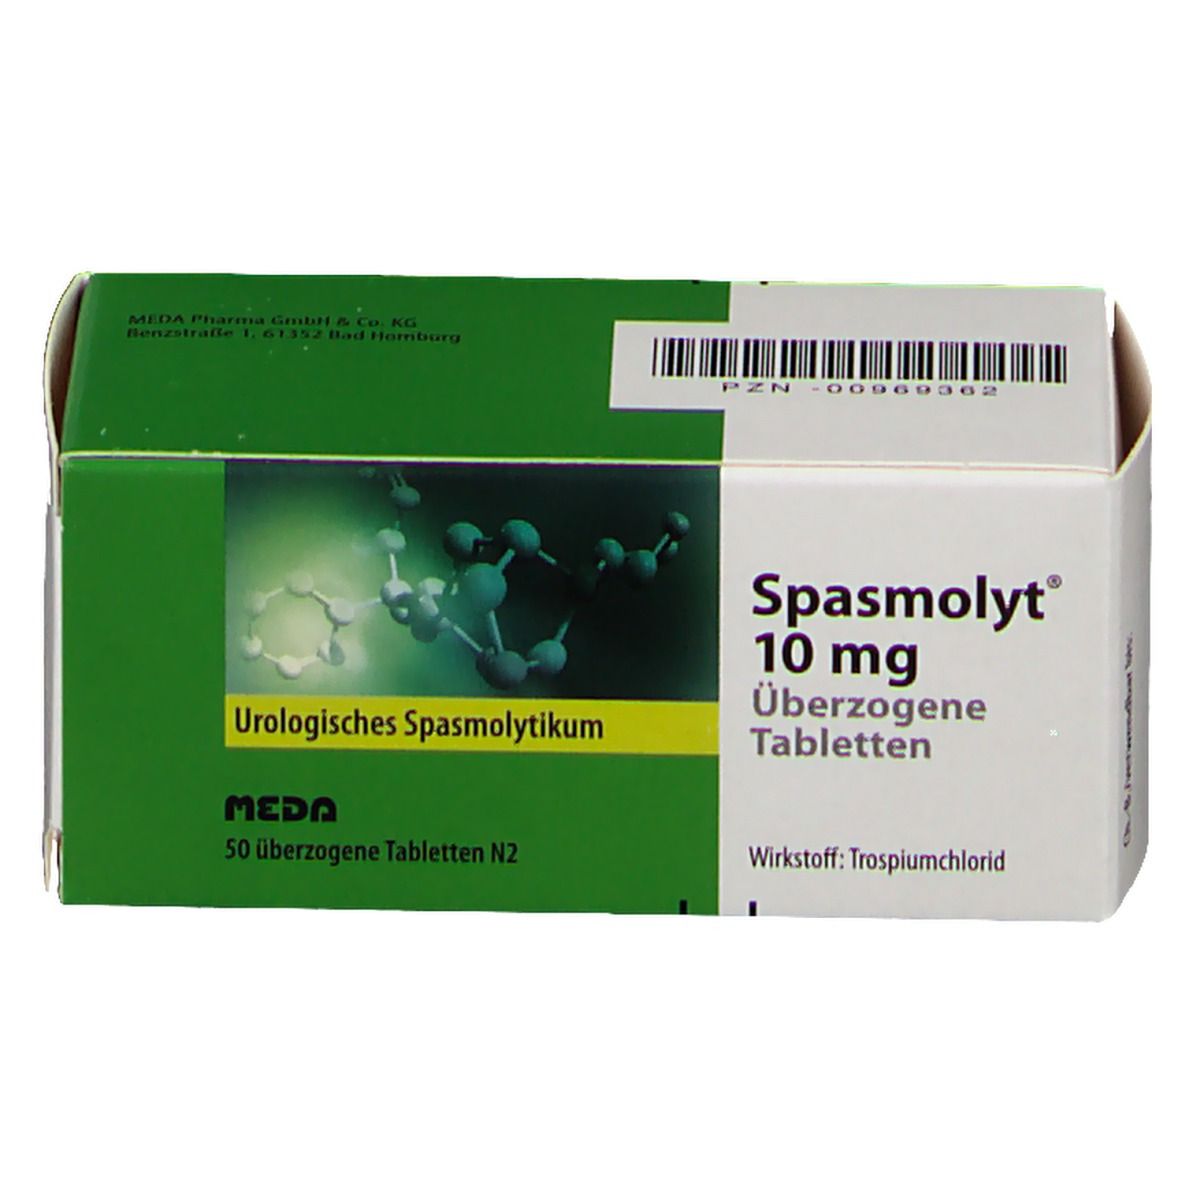 Spasmolyt® 10 mg